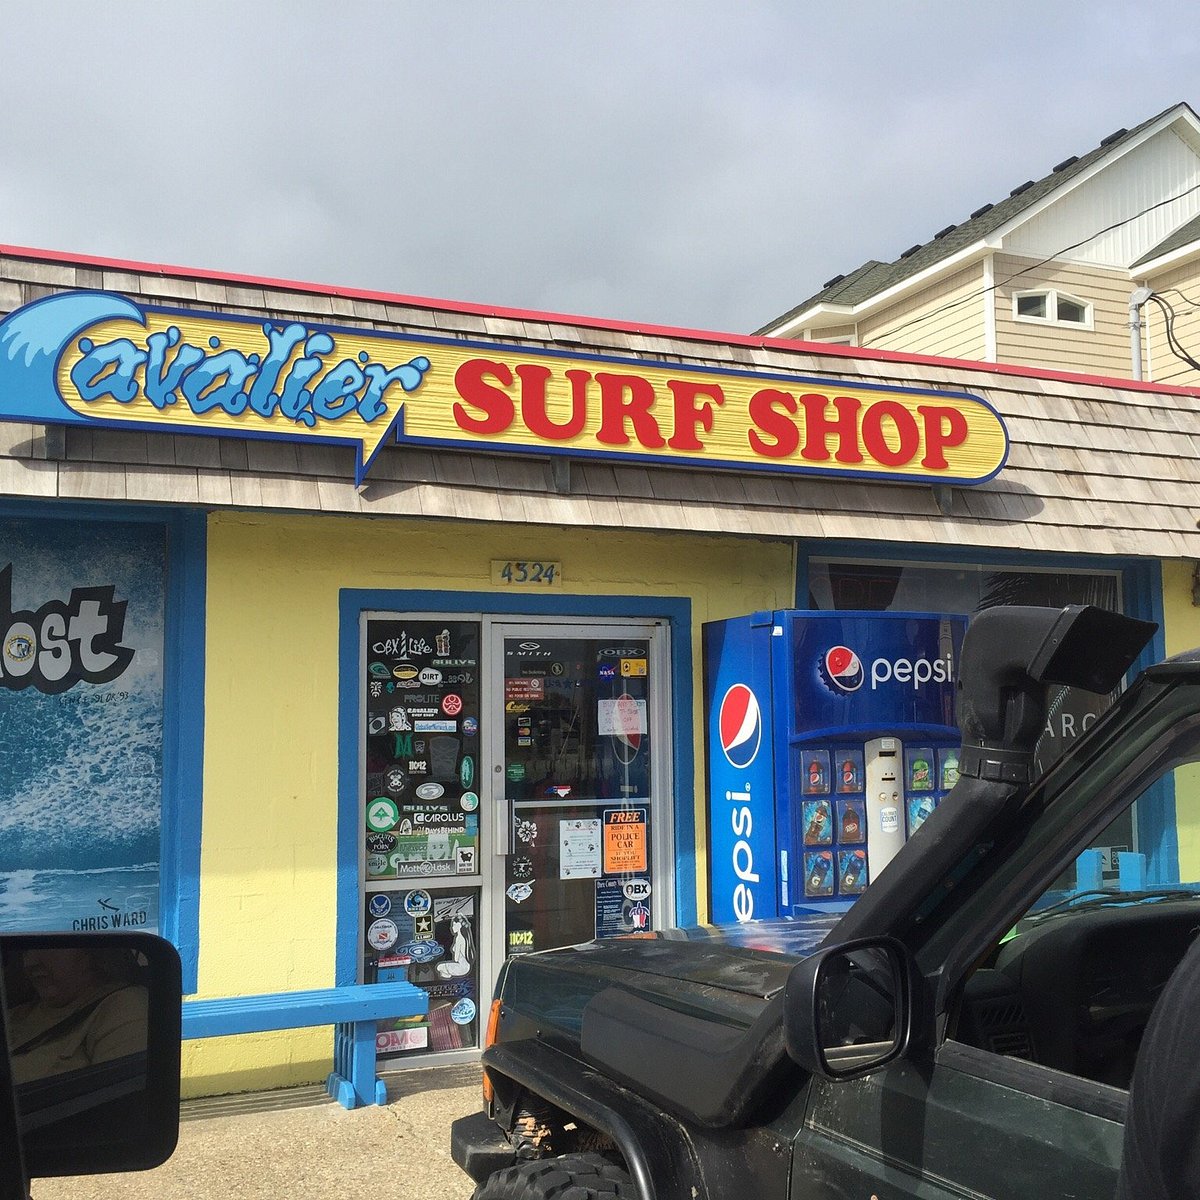 Cavalier Surf Shop